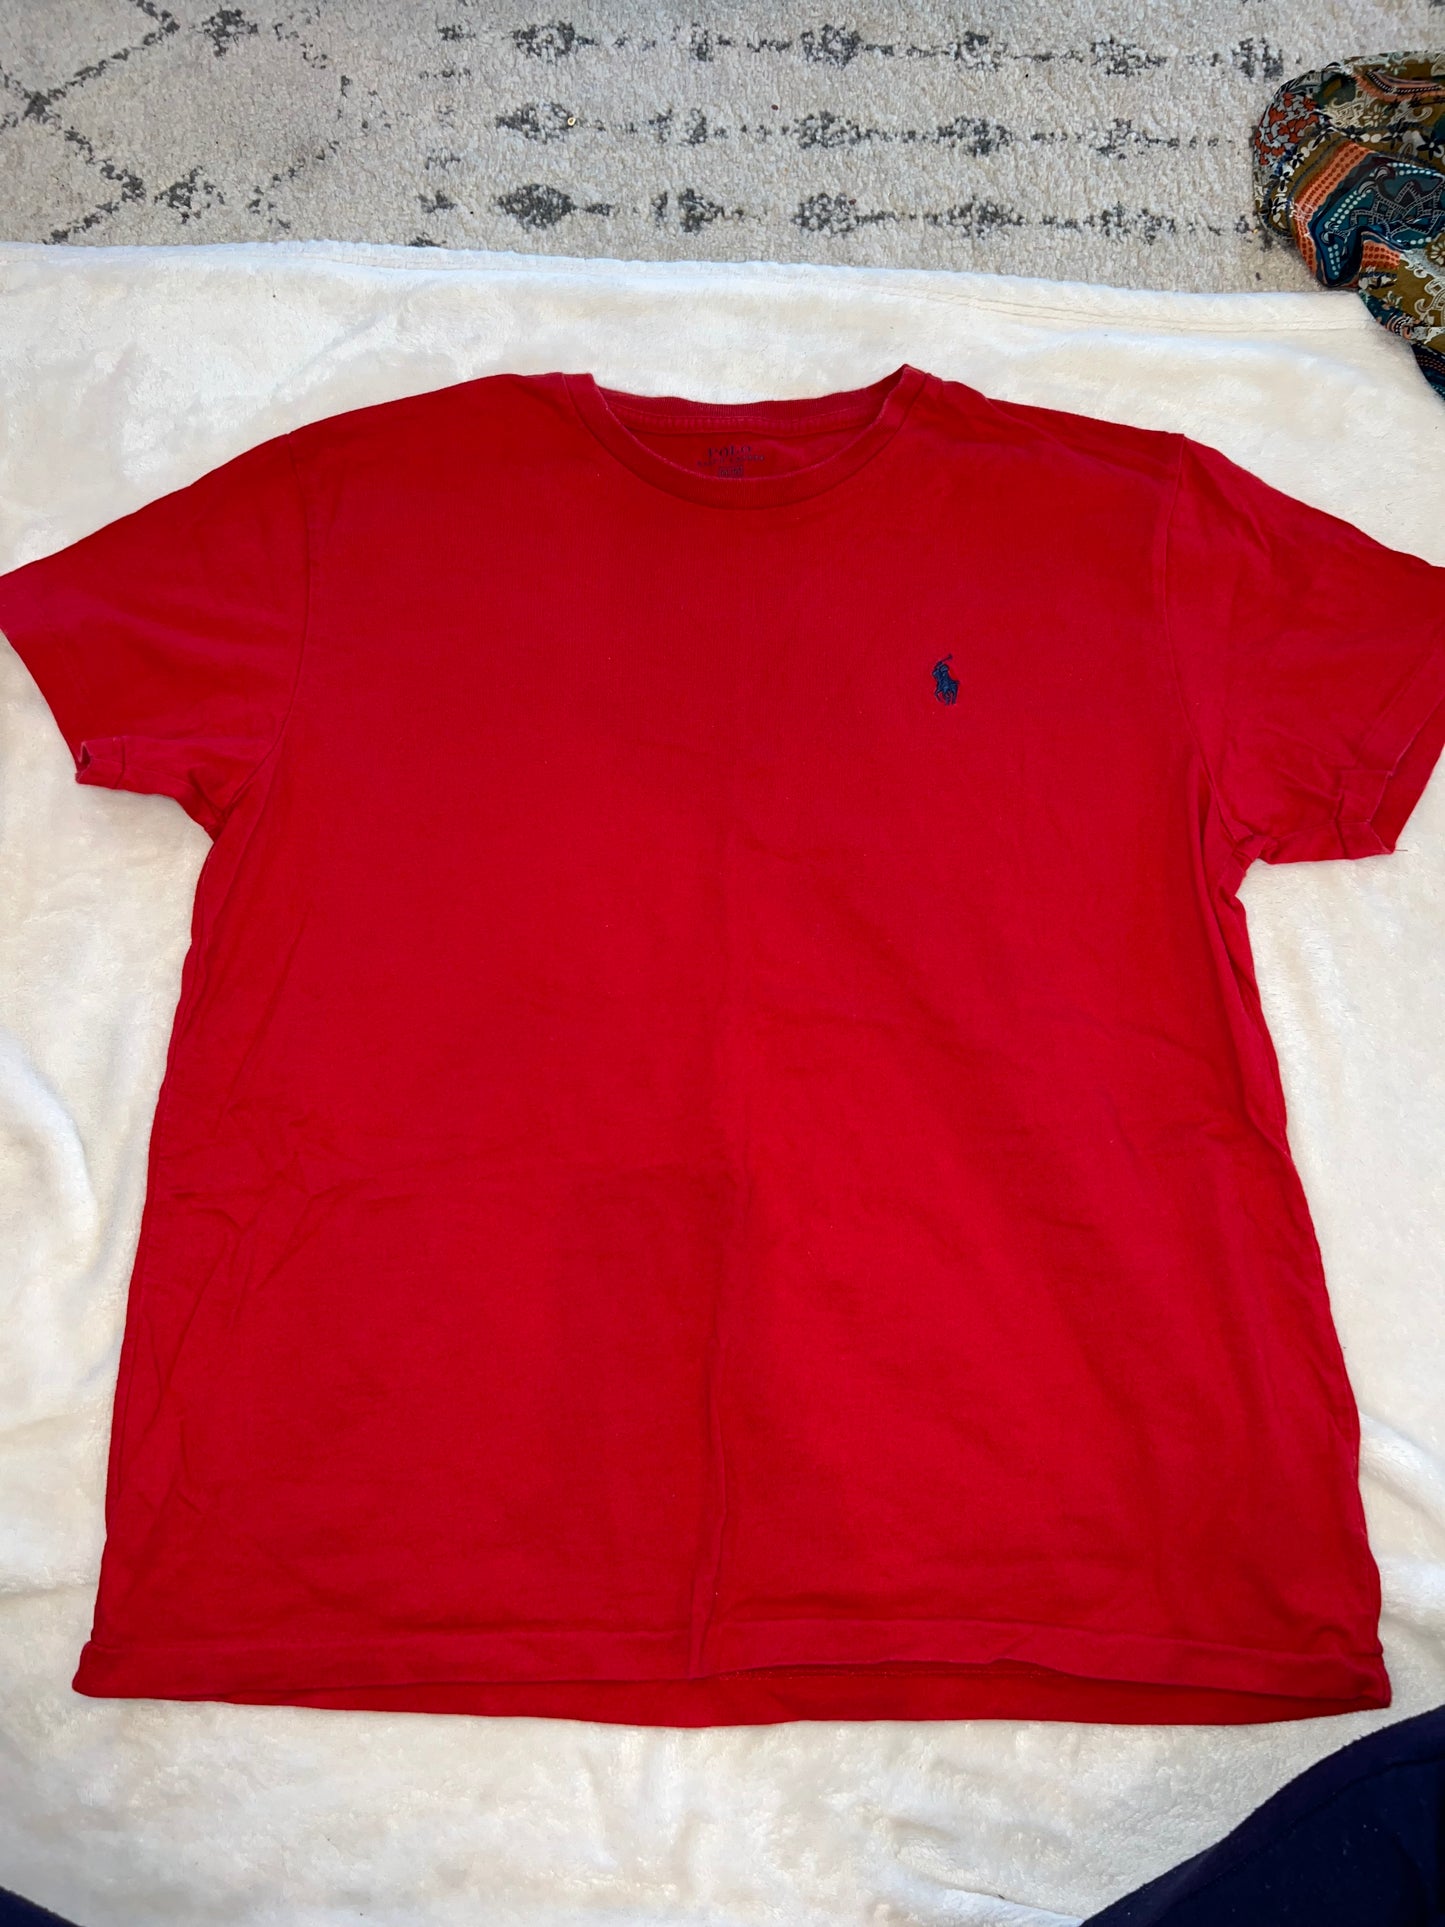 Mens Medium Polo Shirt Red